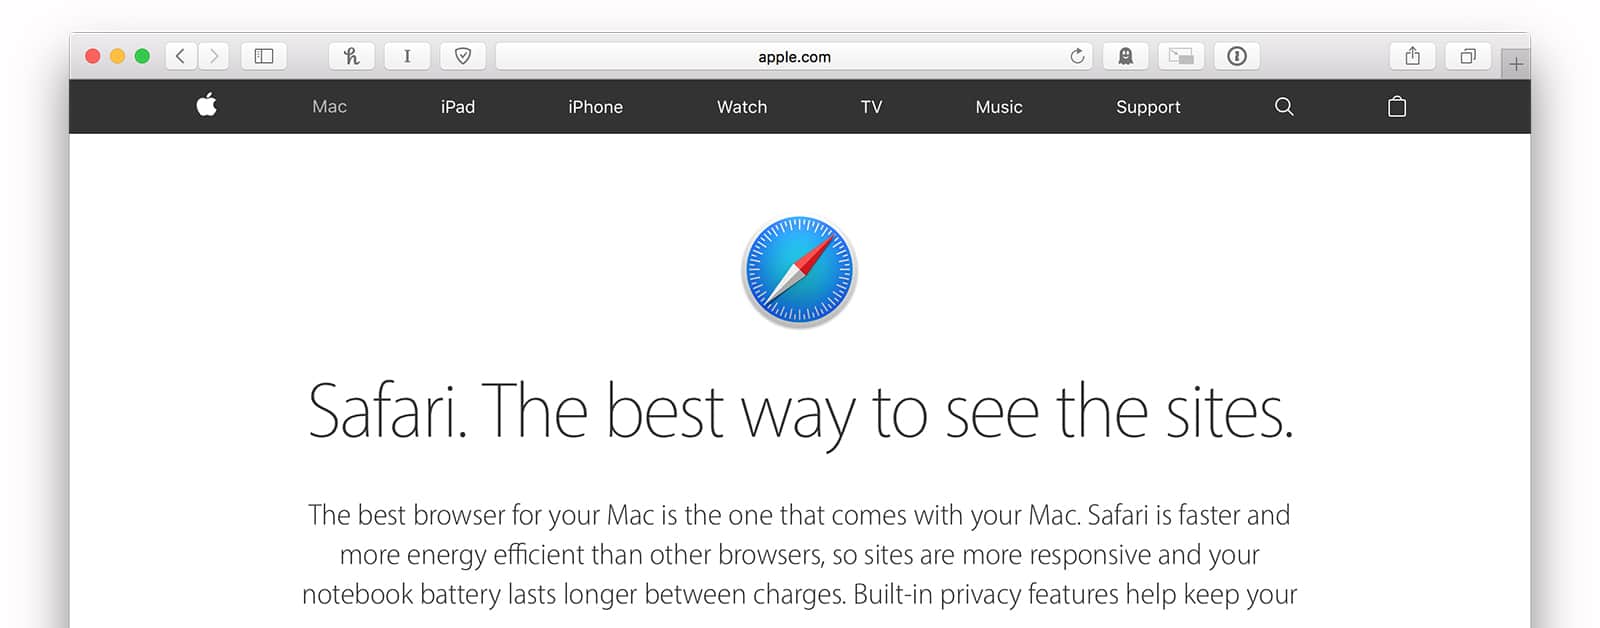 macOS Sierra: Quickly Restore Safari Tabs